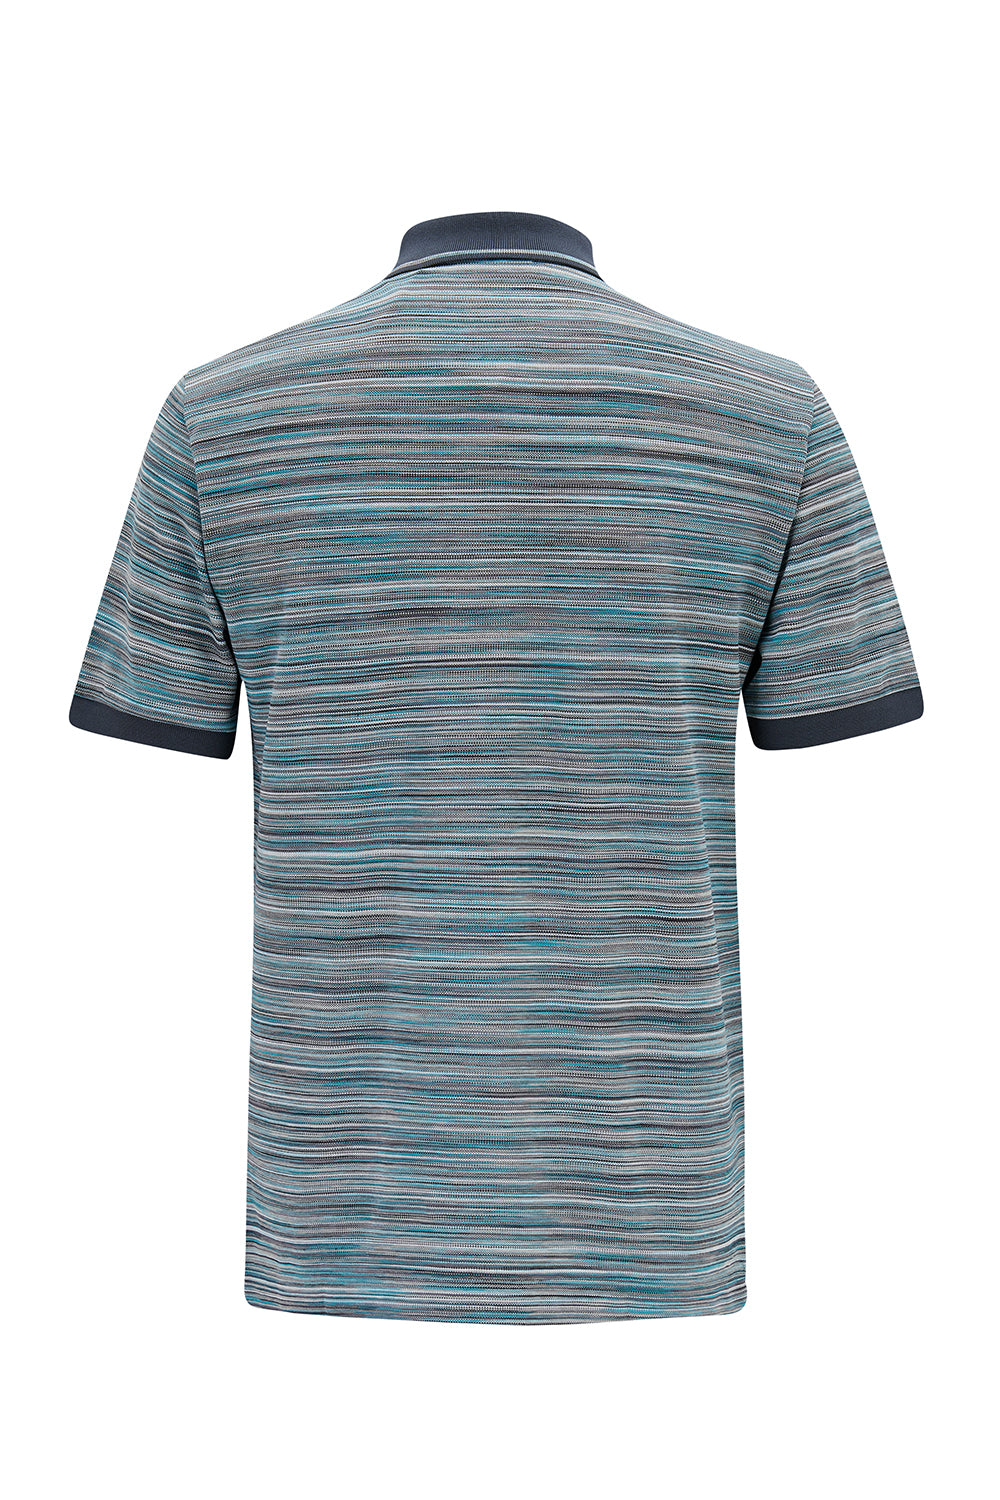 Missoni Men's Contrast Collar Striped Polo Shirt Blue - Back View